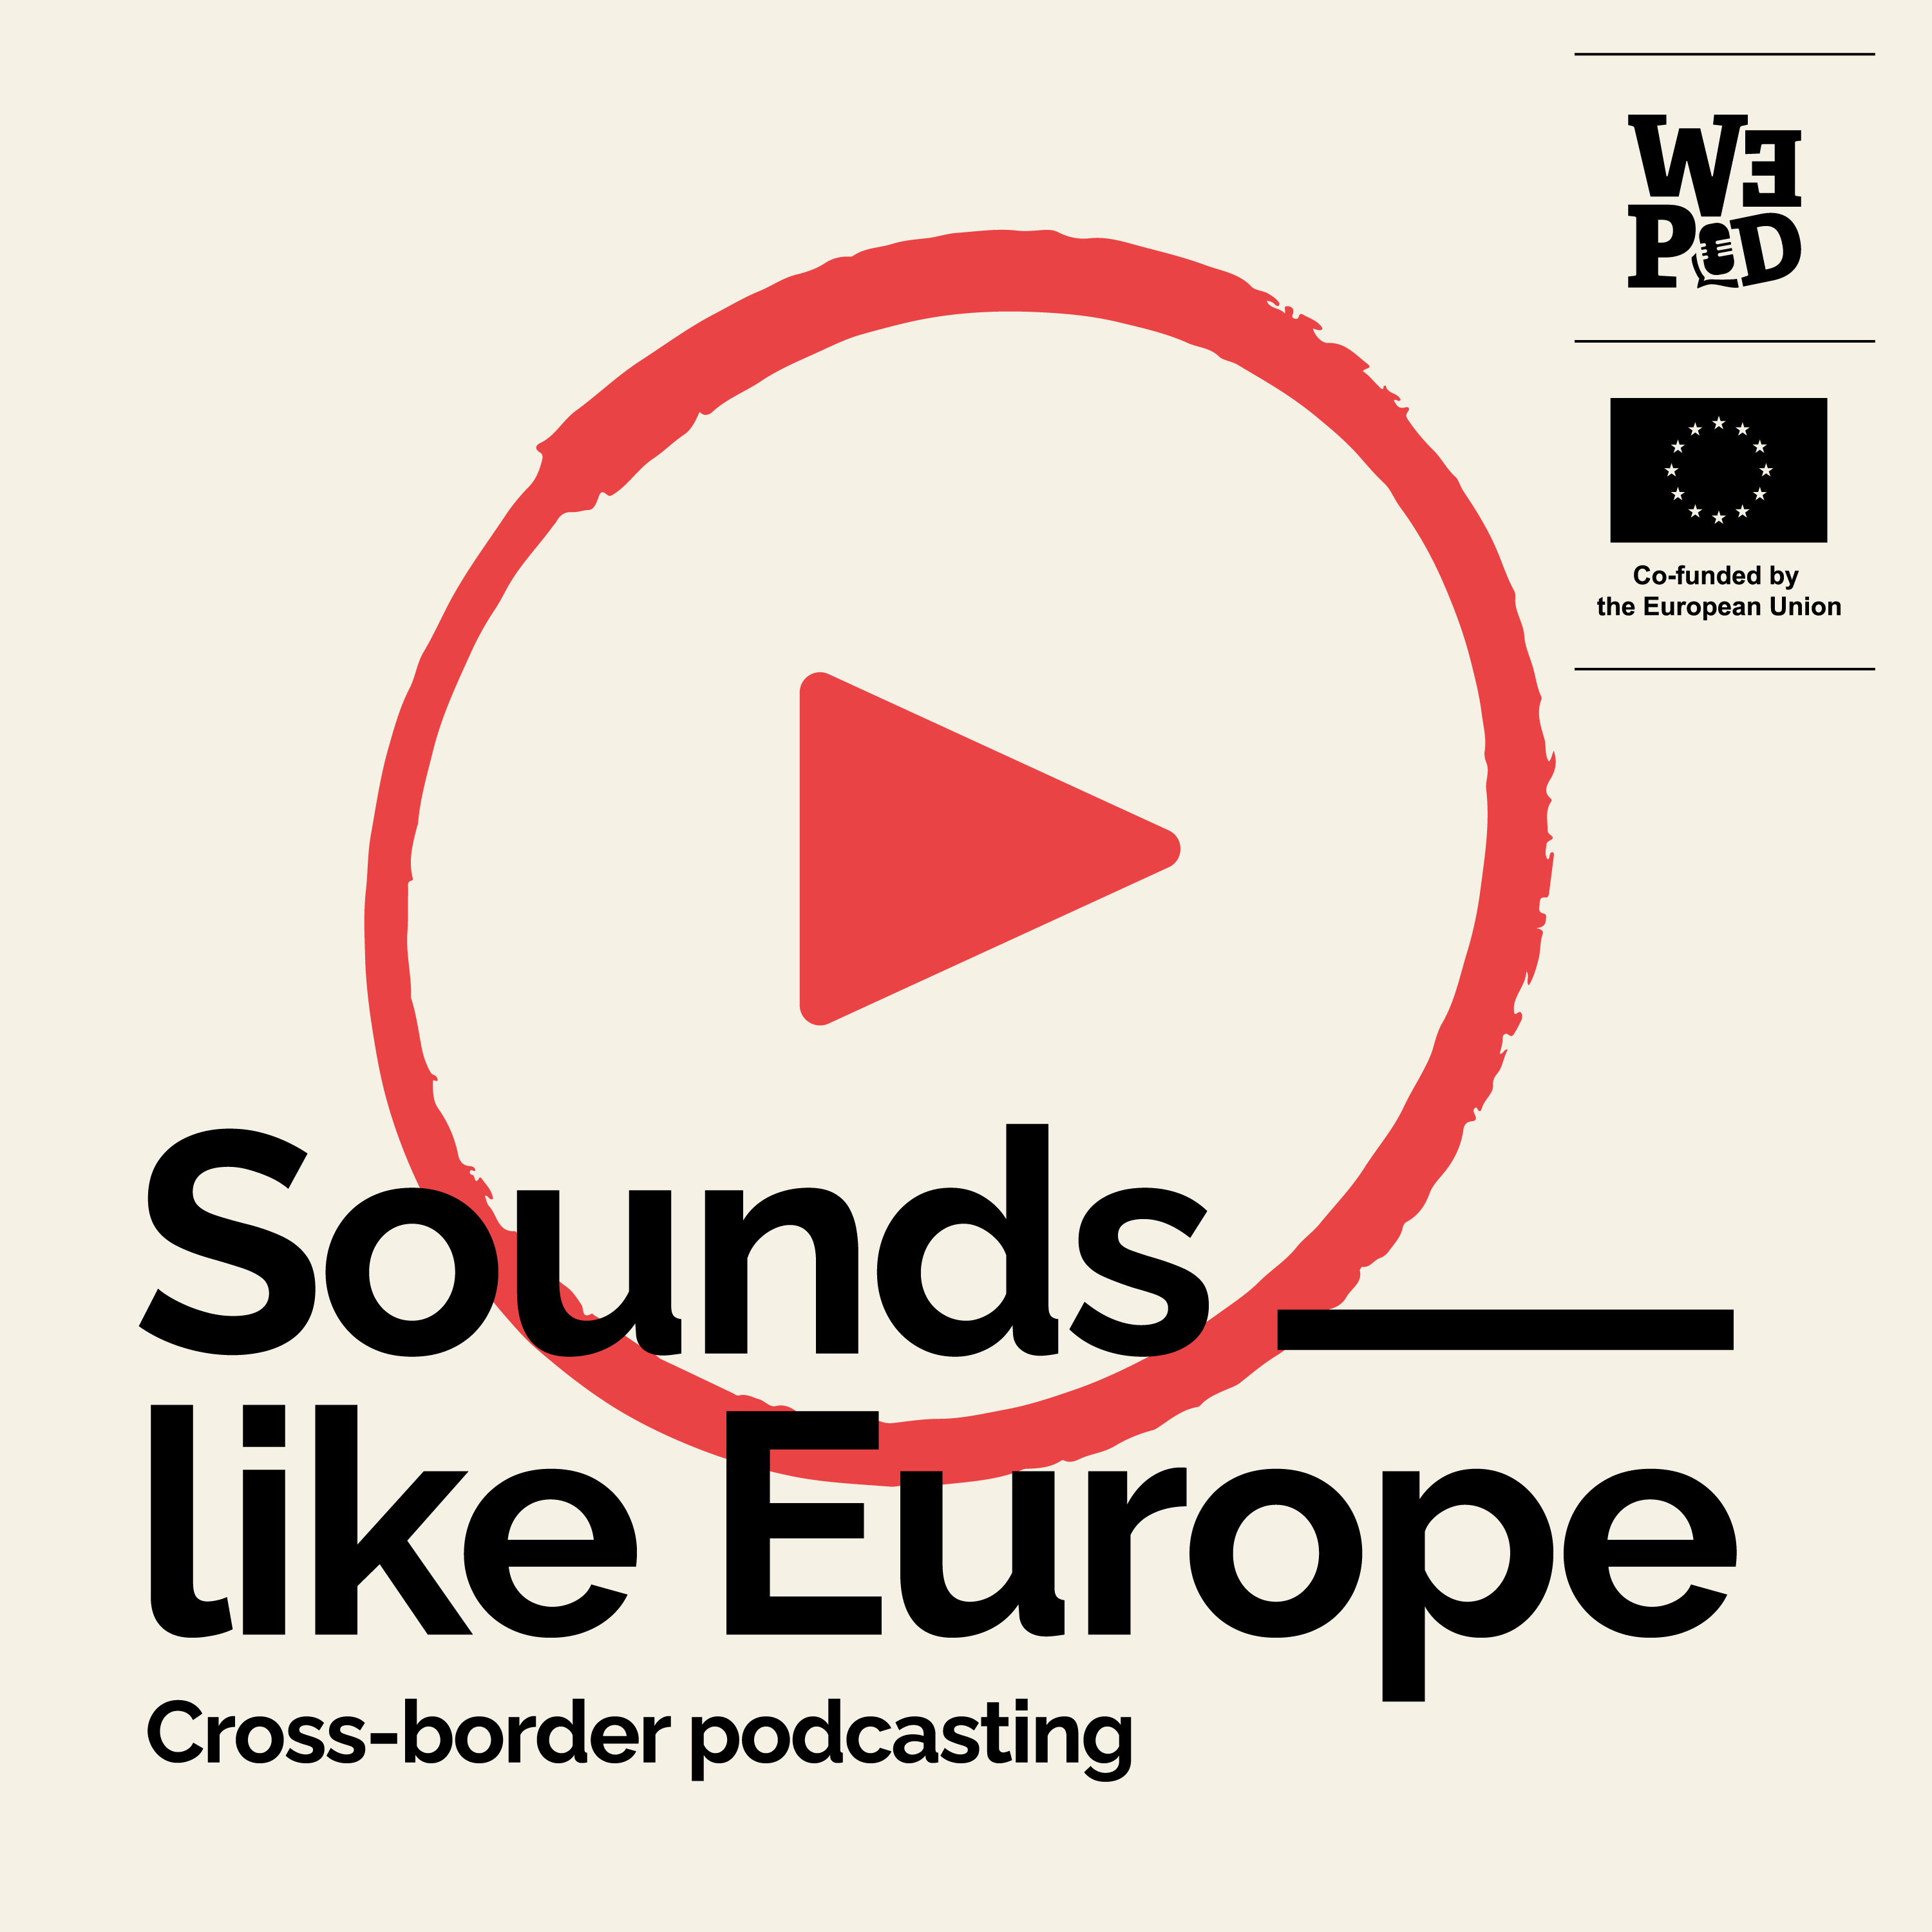 Sounds like Europe, cross-border podcasting